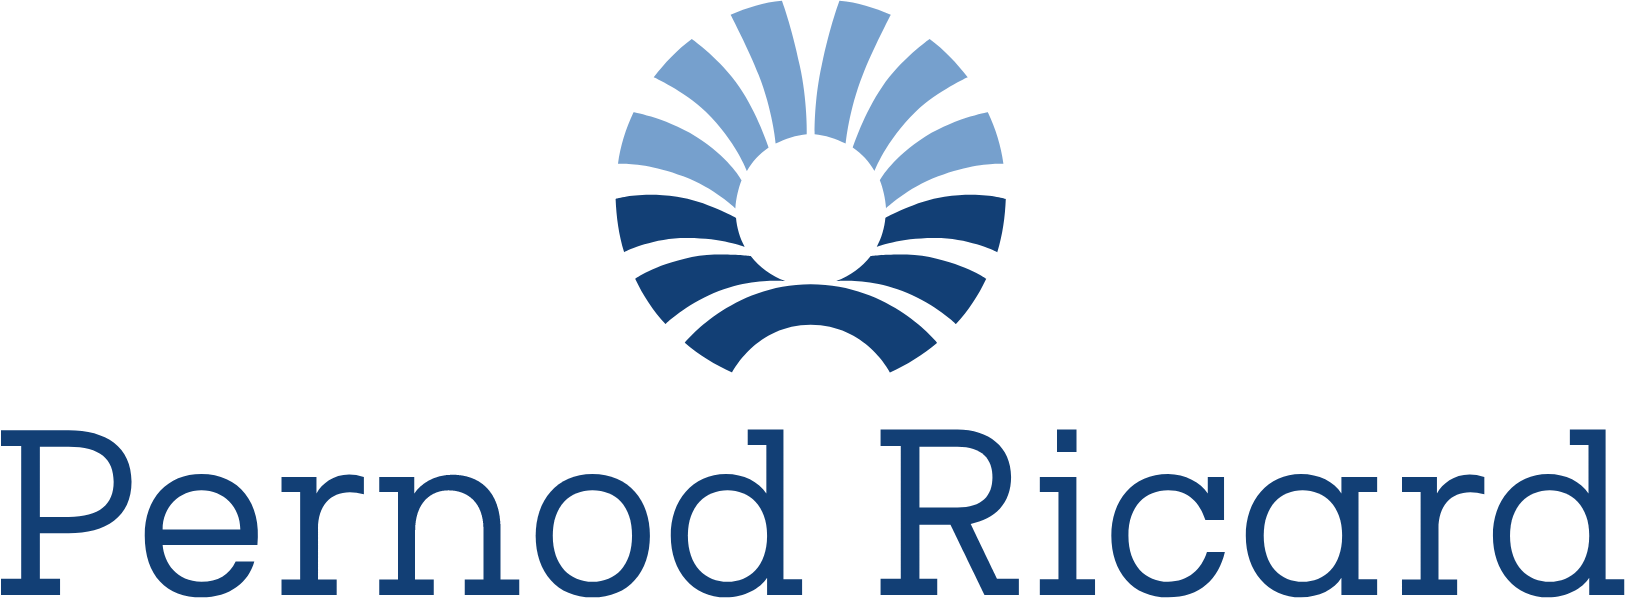 Pernod Ricard logo large (transparent PNG)